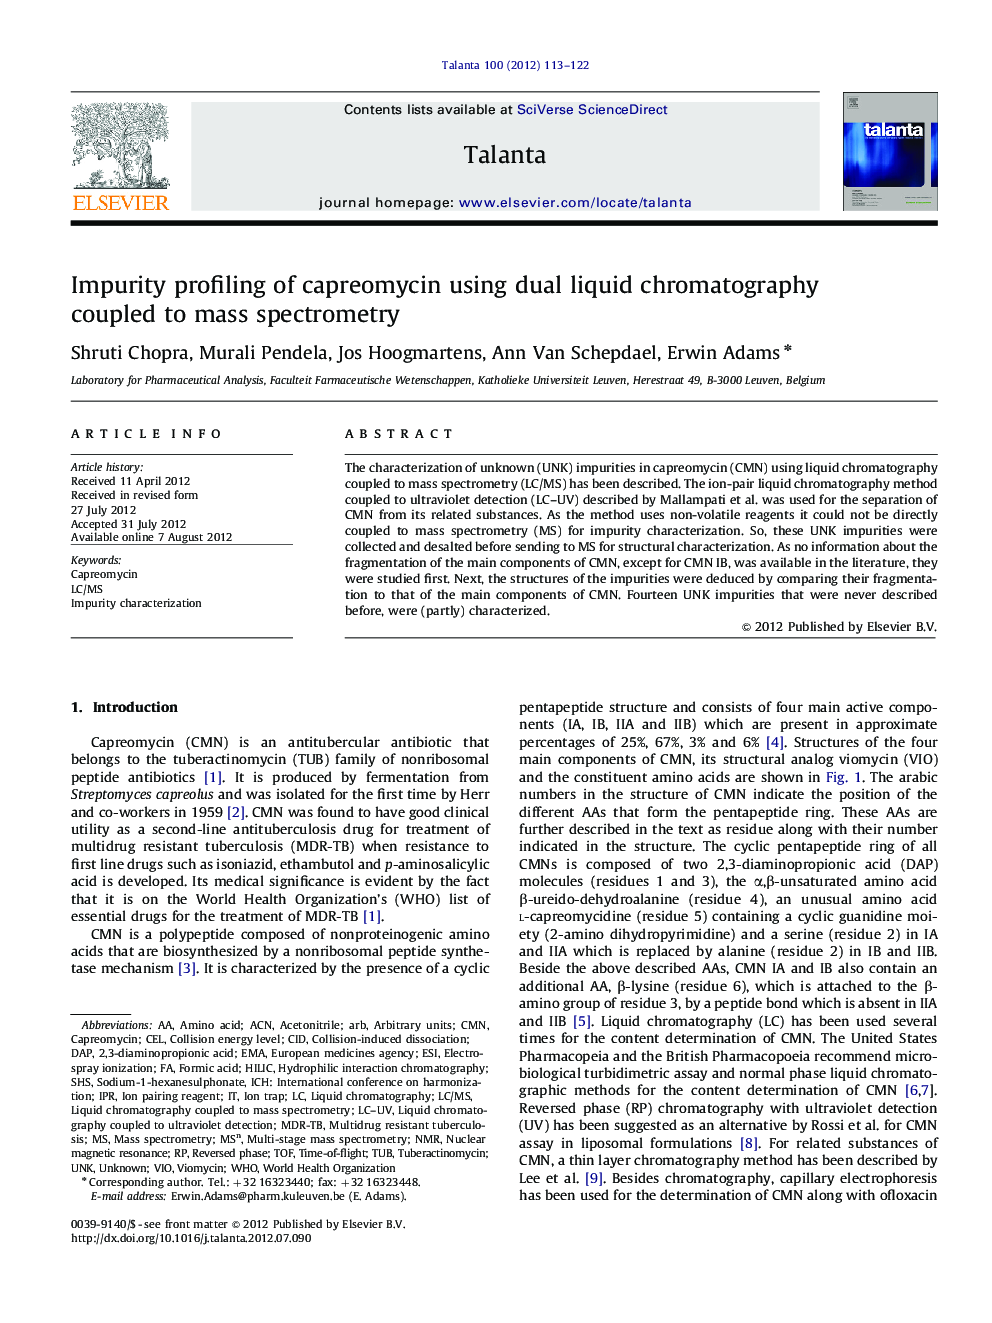 Impurity profiling of capreomycin using dual liquid chromatography coupled to mass spectrometry